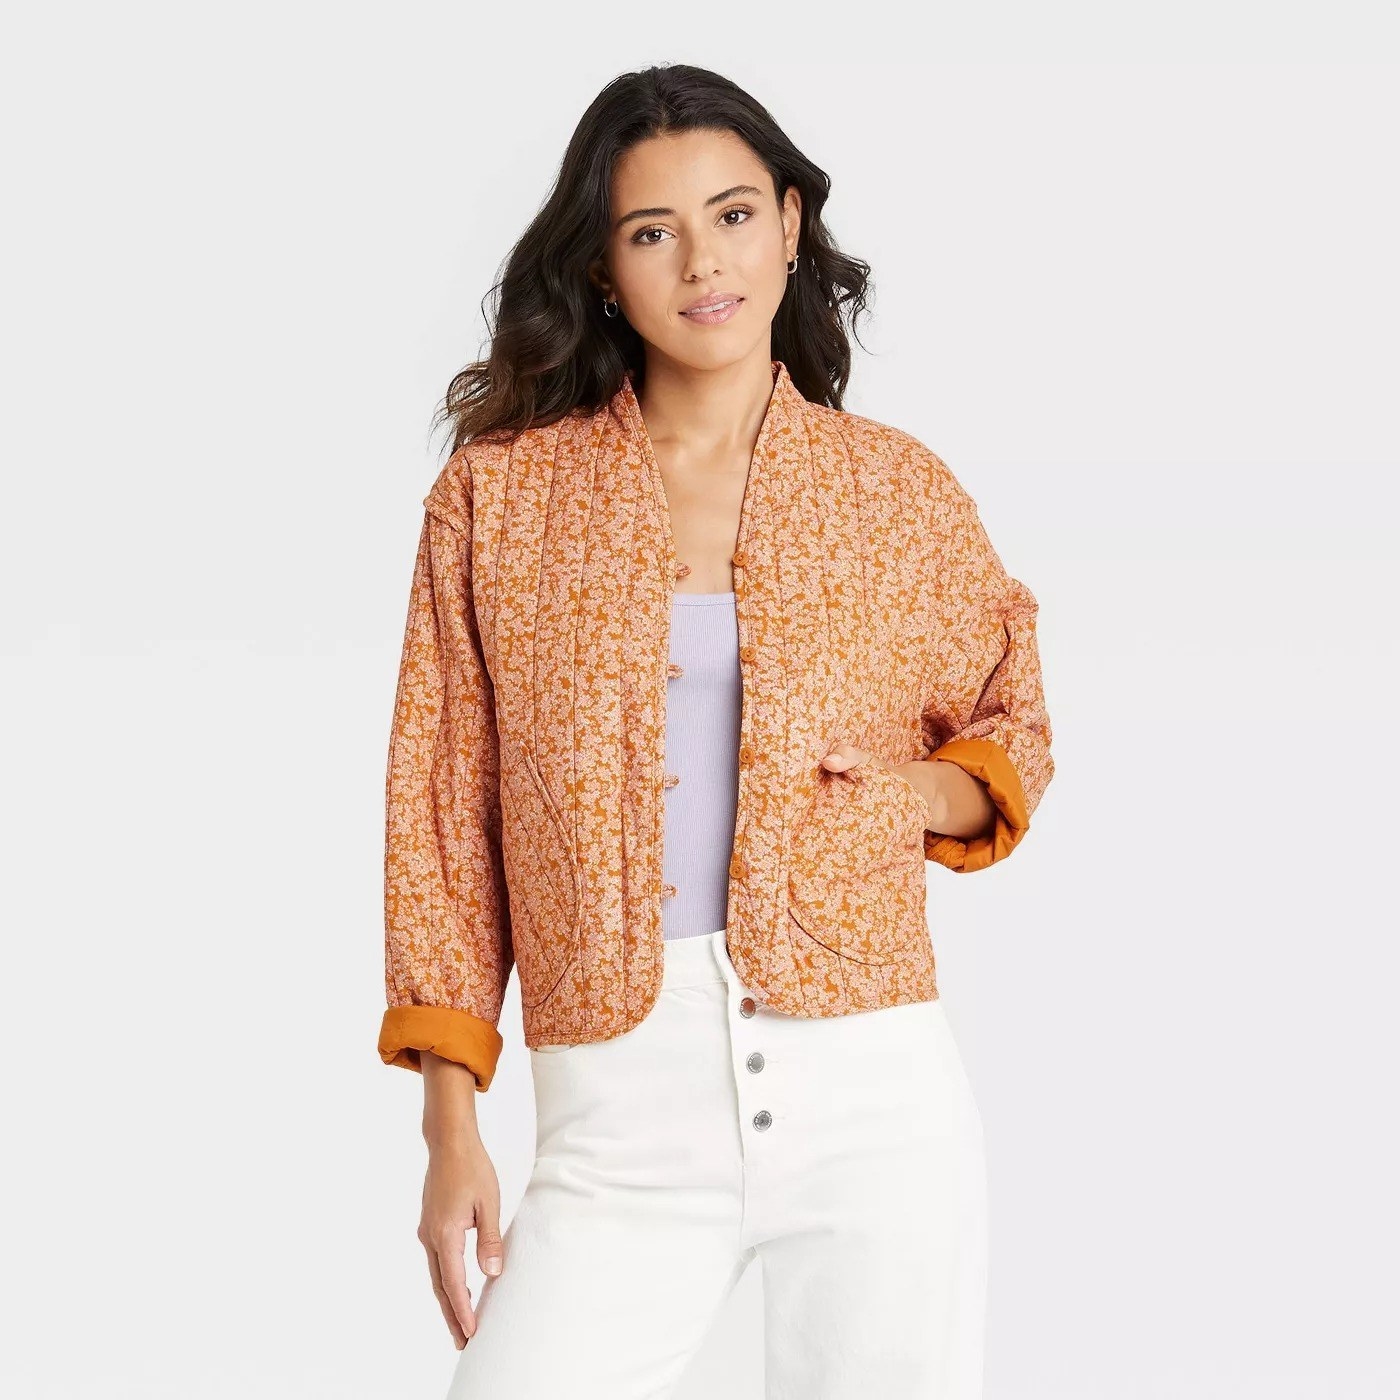 Model wearing orange floral patterned jacket with two front pockets